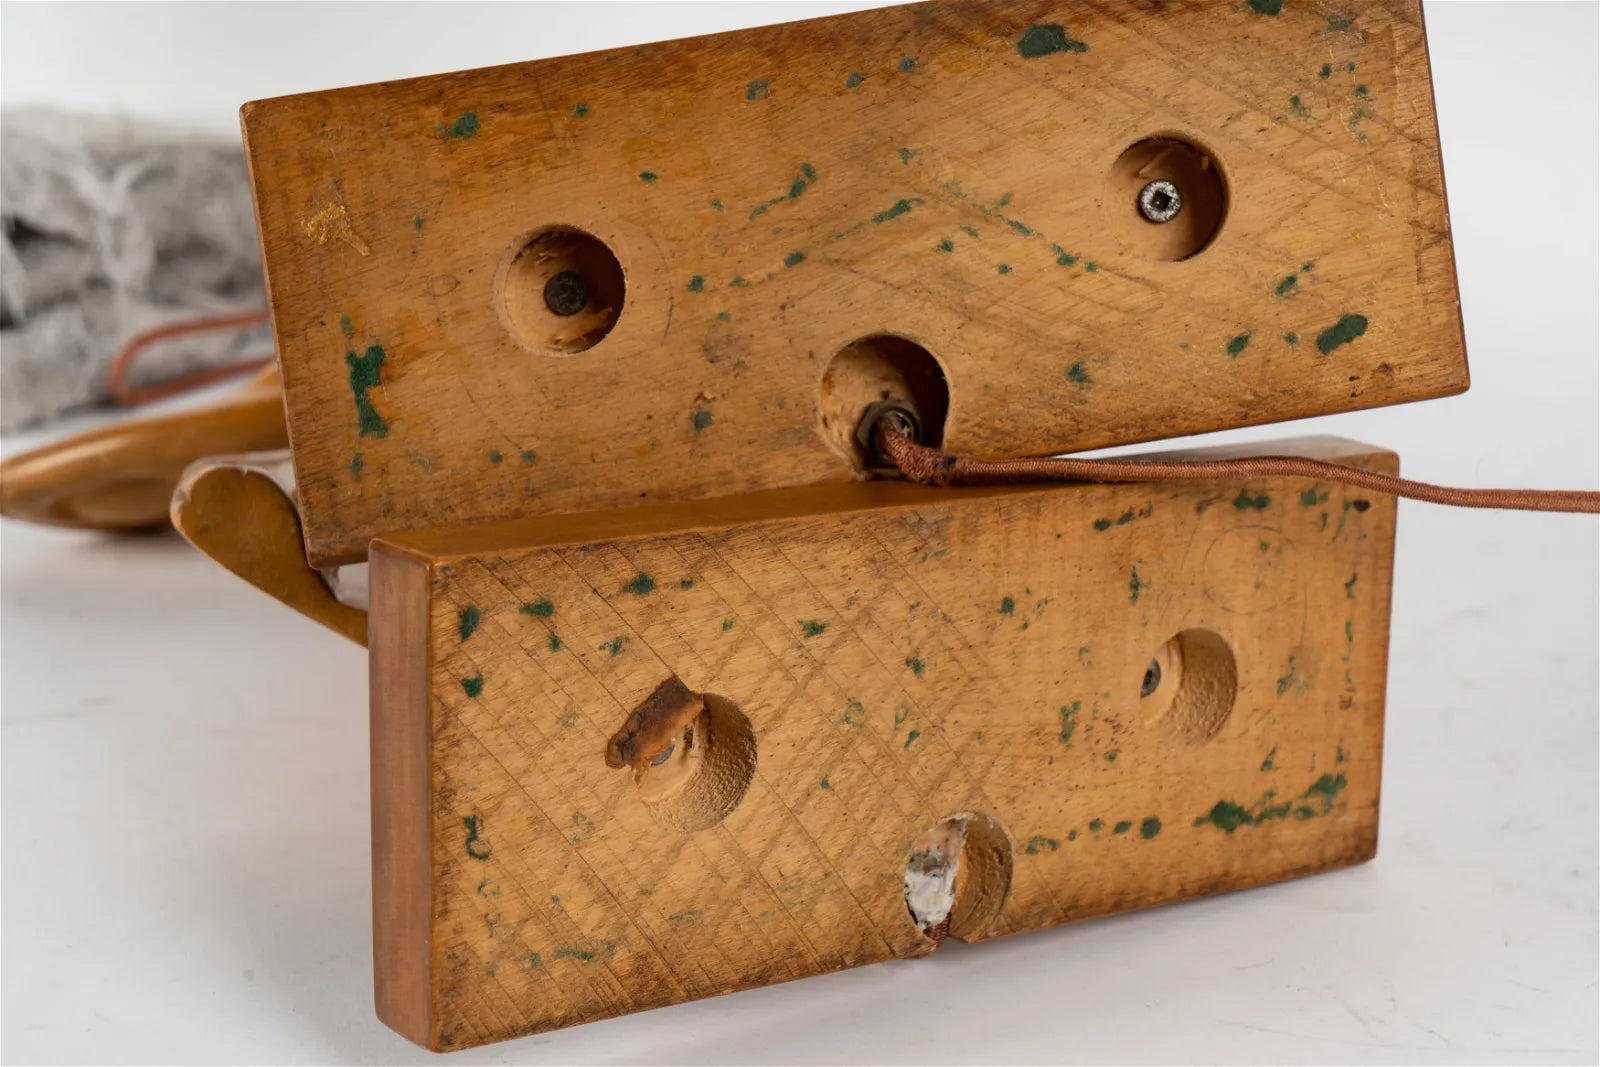 AL2-019: Pair of Art Deco Figural Dancer Carved Wood Table Lamps